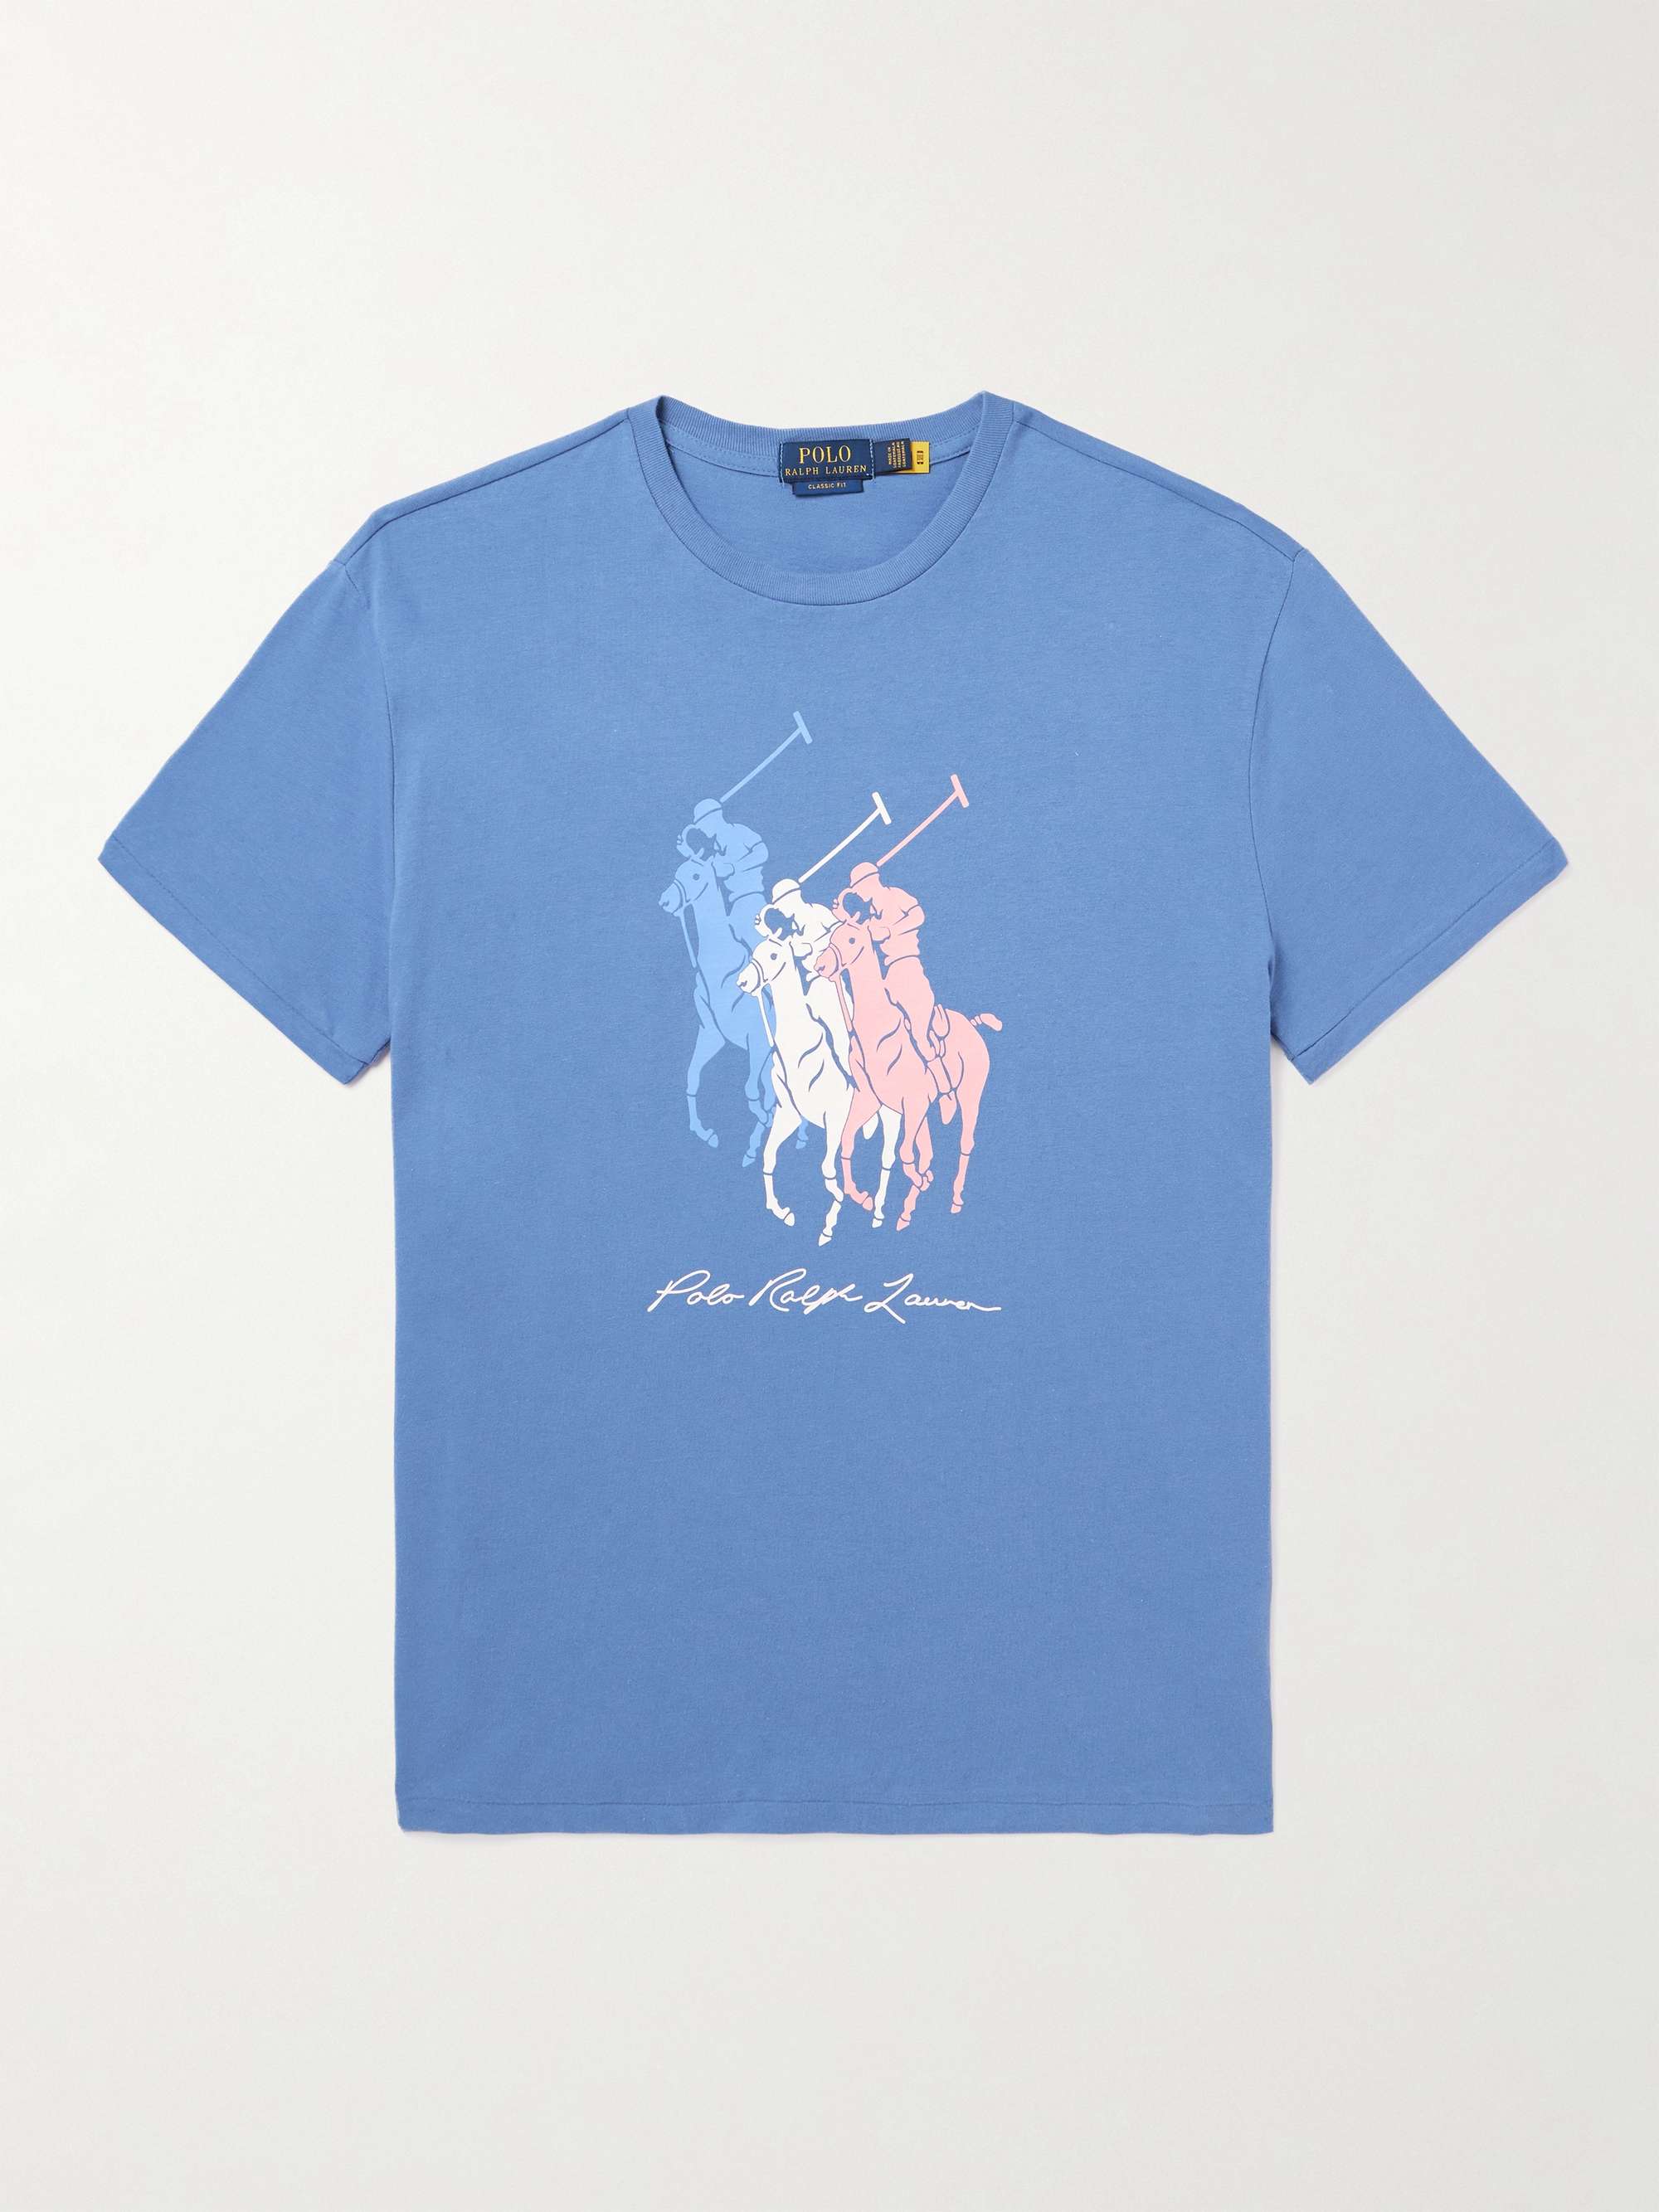 POLO RALPH LAUREN Printed Cotton-Jersey T-Shirt for Men | MR PORTER